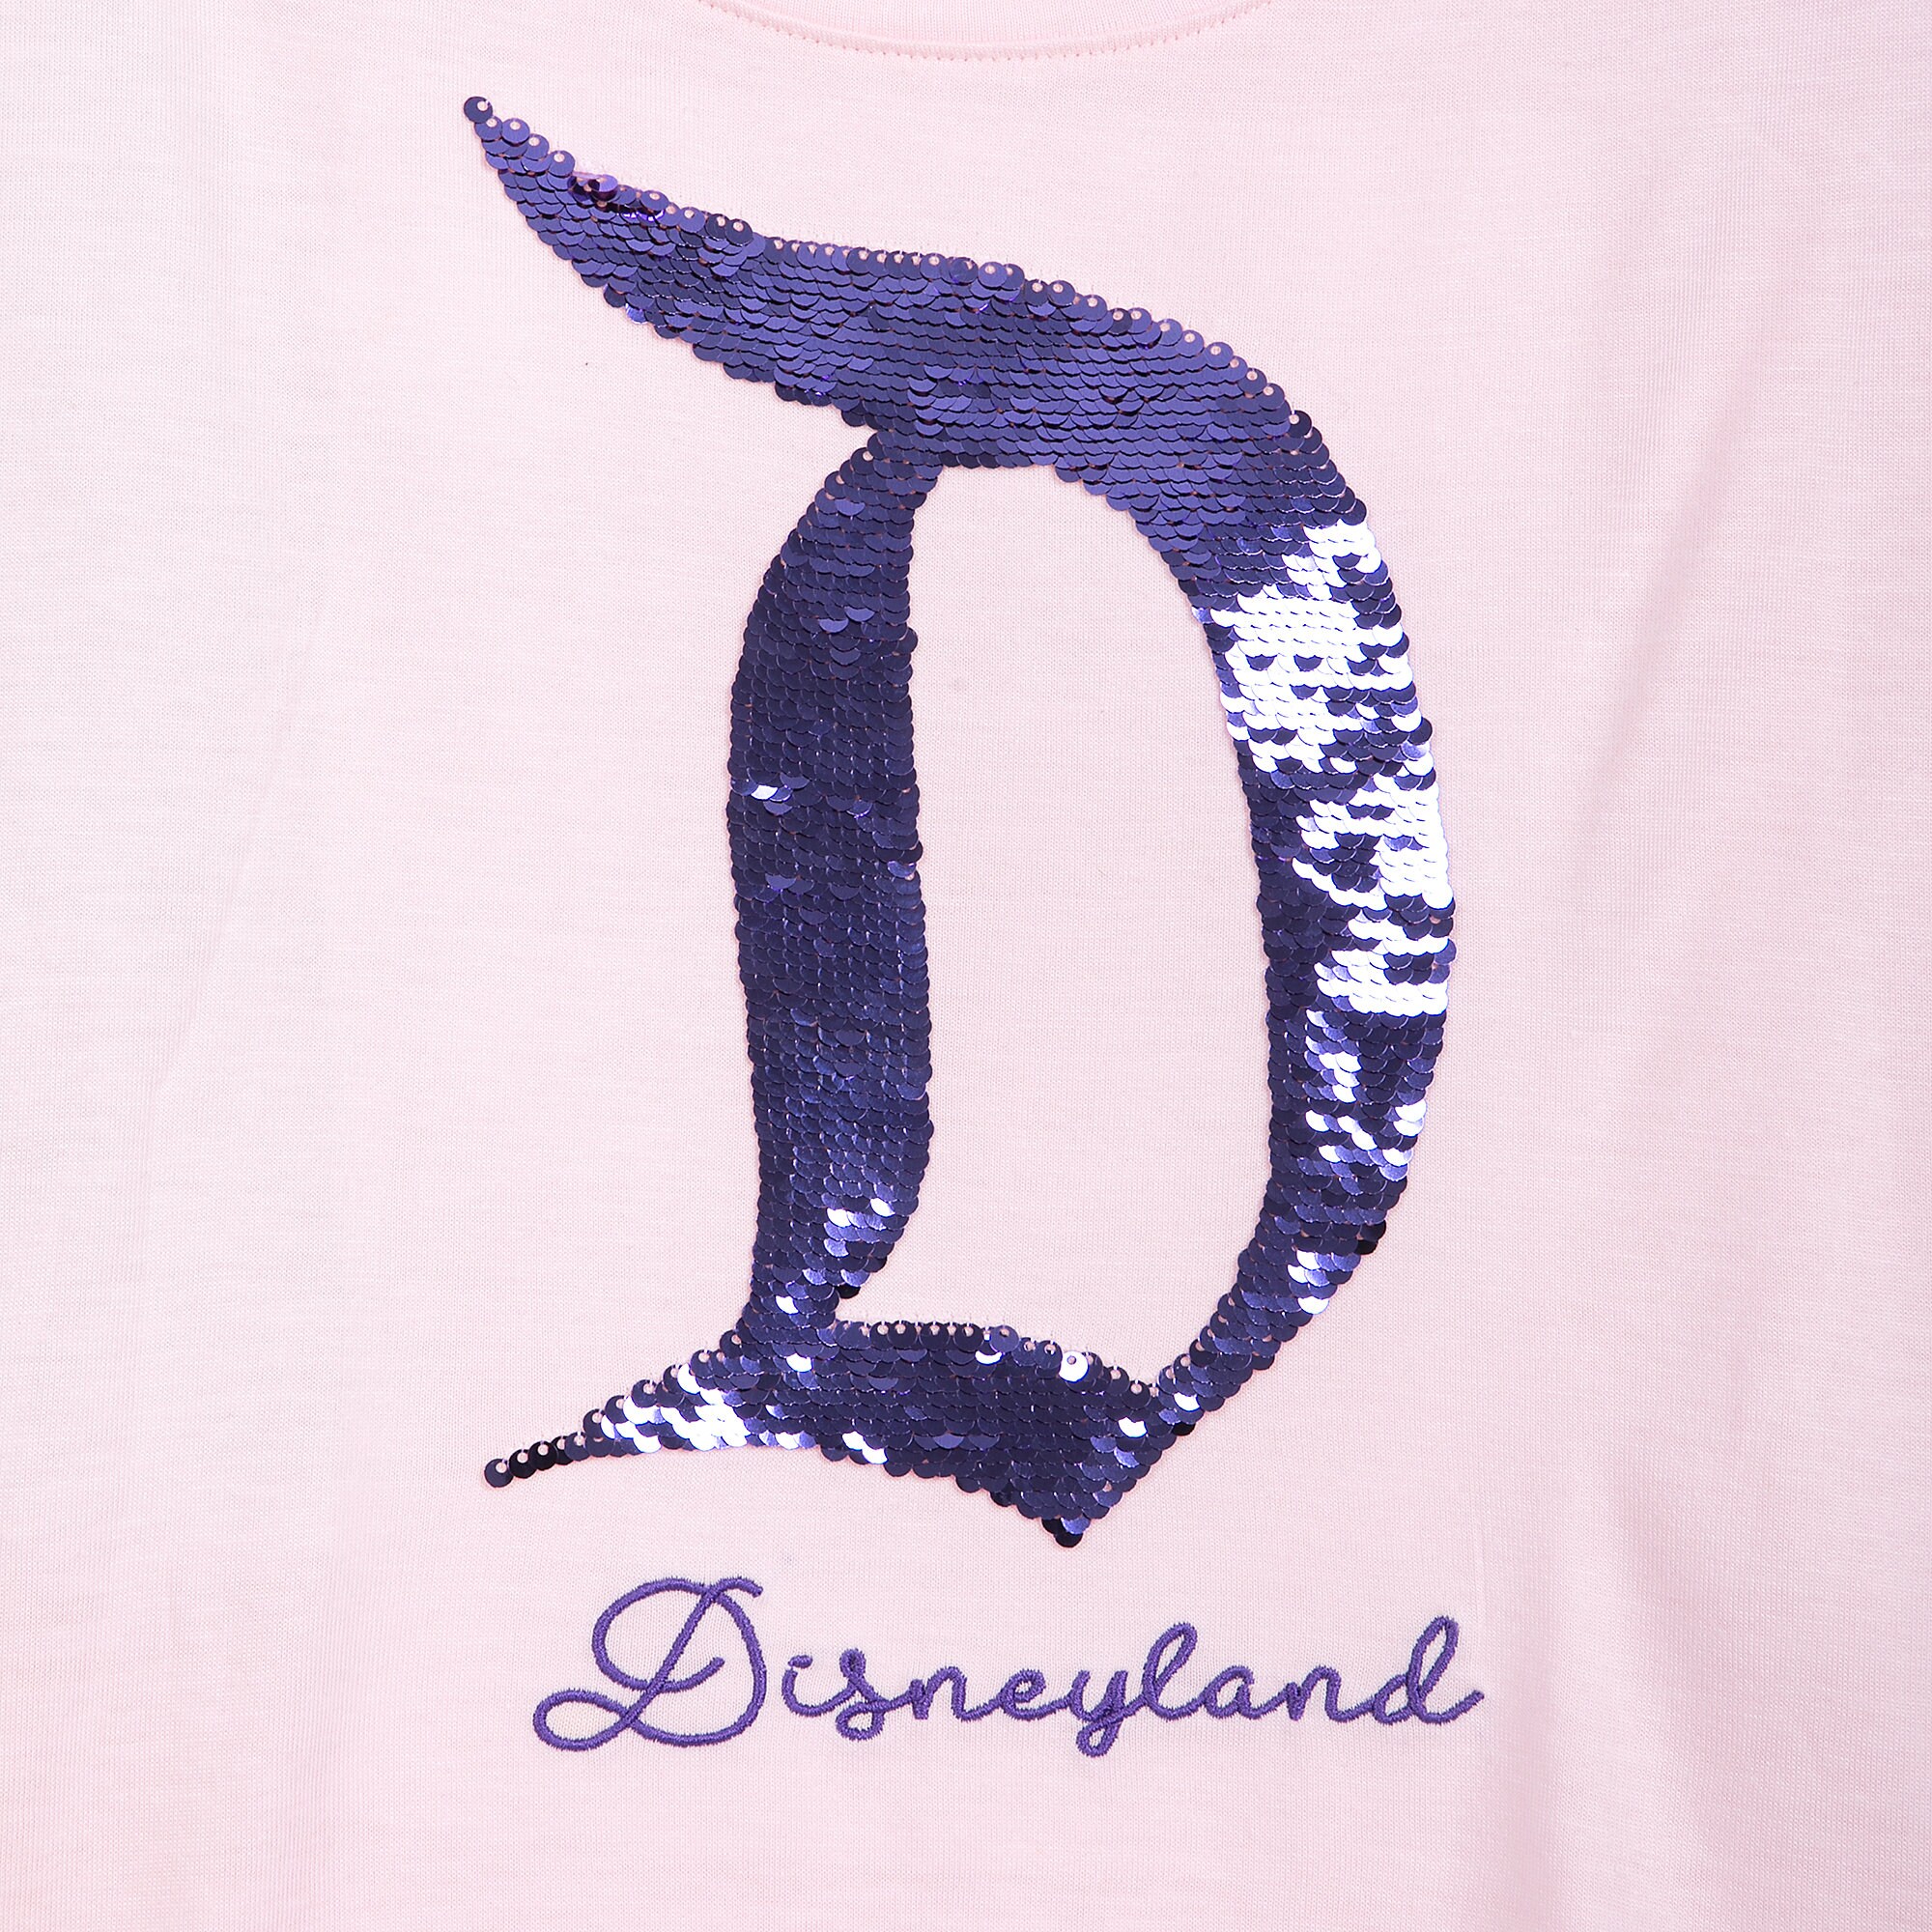 Disneyland Reversible Sequin T-Shirt for Women